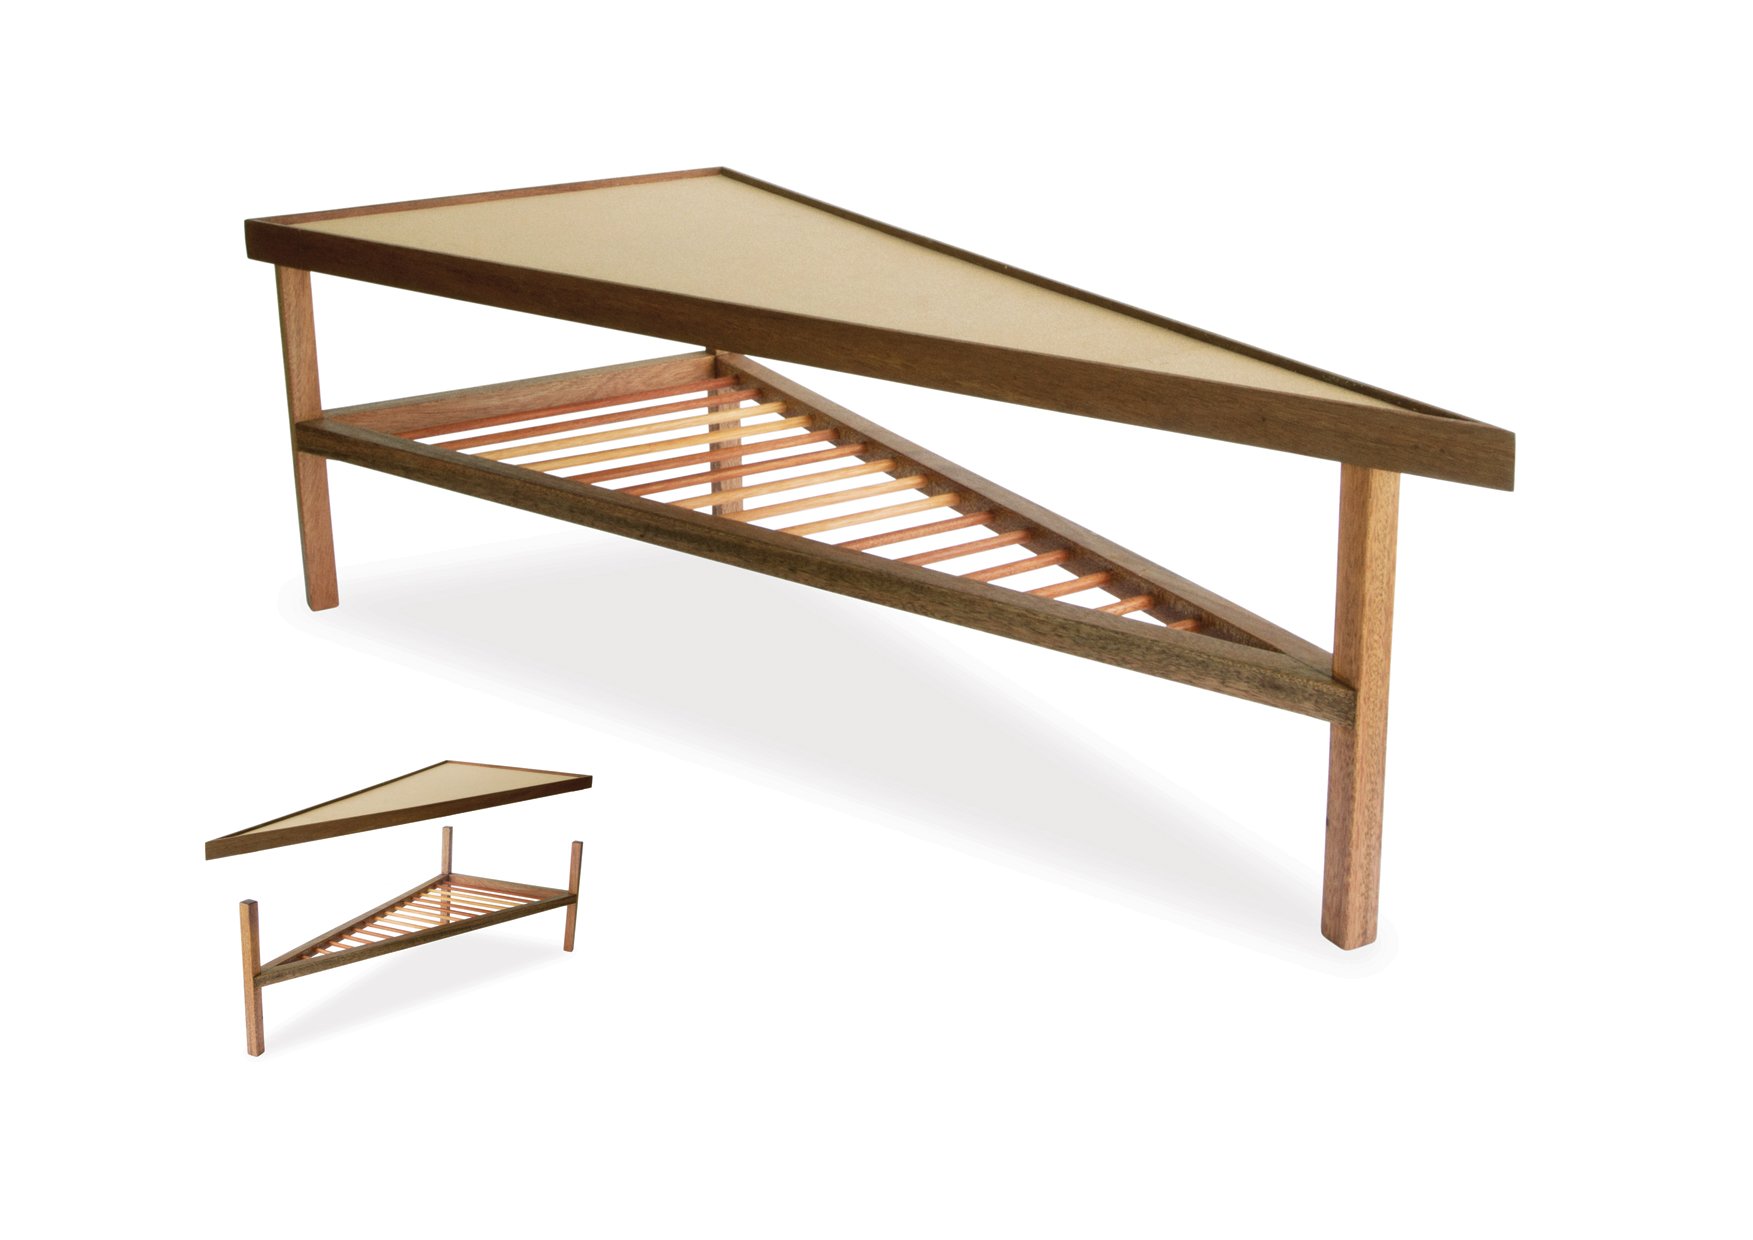  REVERSIBLE SIDE TABLE // Layered cork / Pine wood core / Meranti wood trim and base 